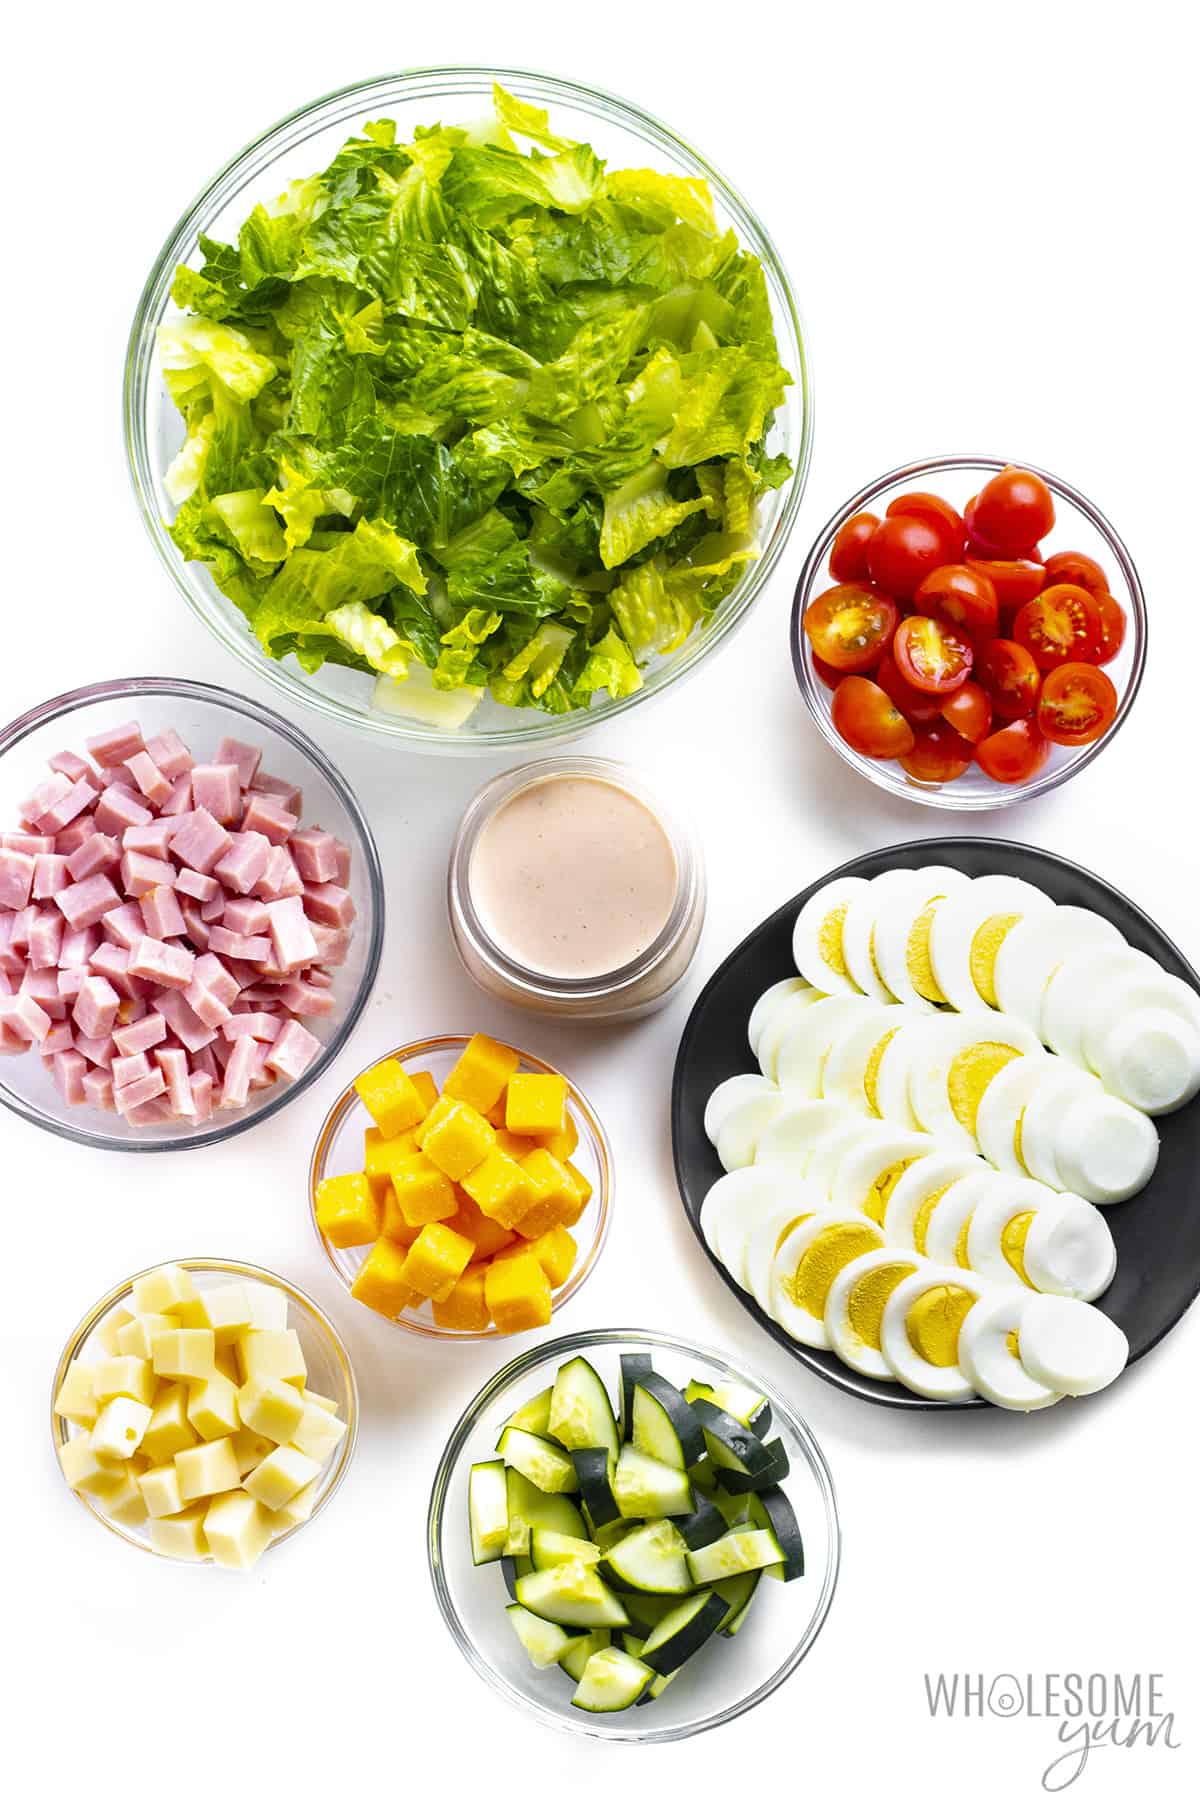 Chef salad ingredients in bowls.